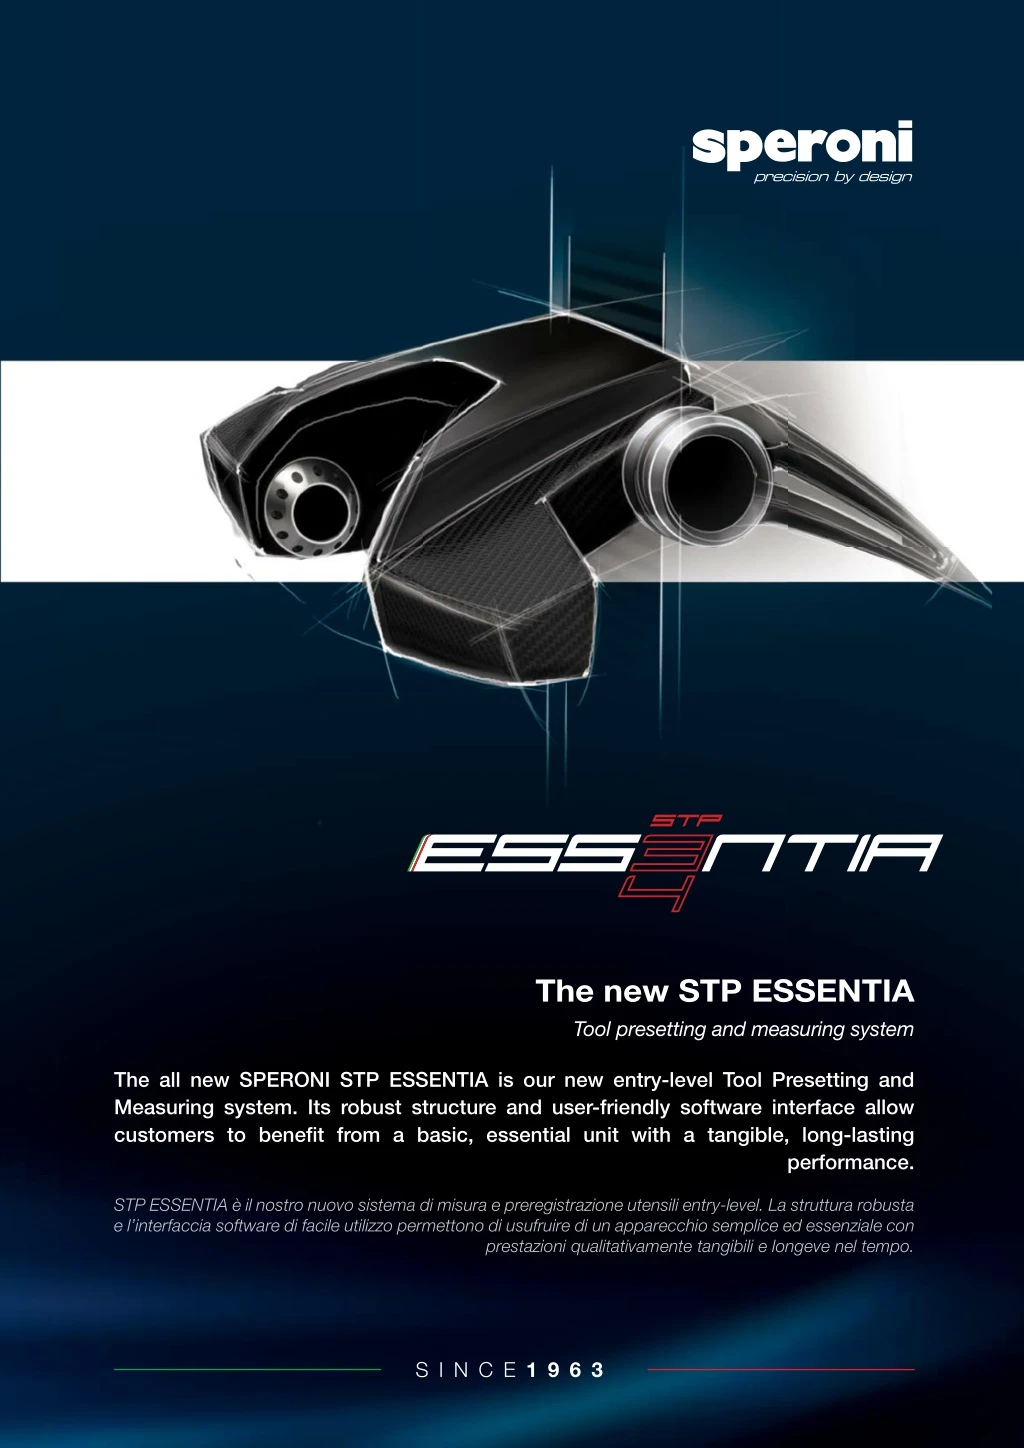 the new stp essentia tool presetting